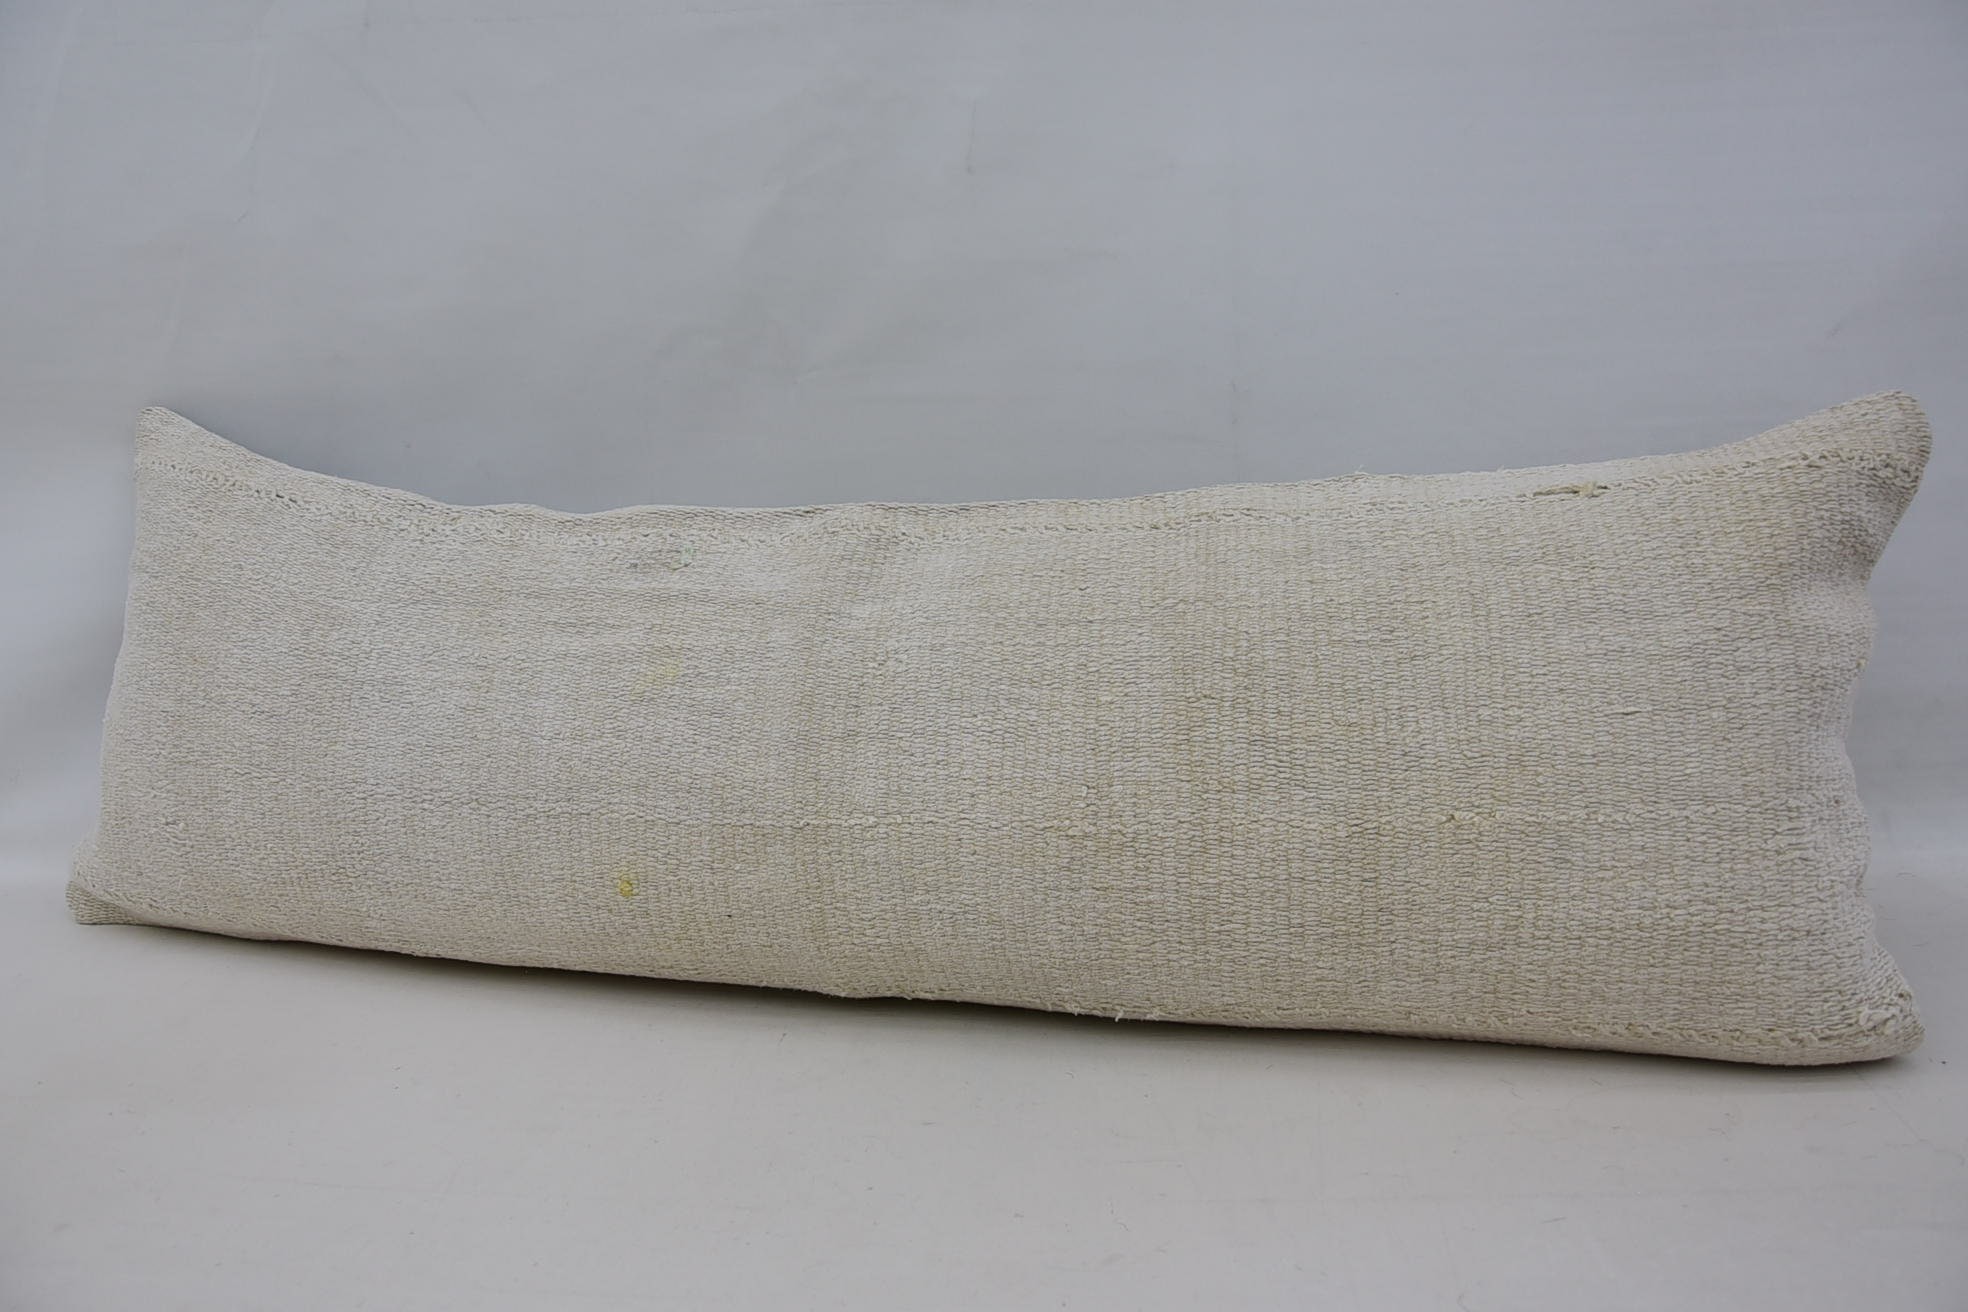 Antique Pillows, 16"x48" White Cushion Cover, Boho Throw Pillow Case, Boho Pillow Sham Cover, Throw Kilim Pillow